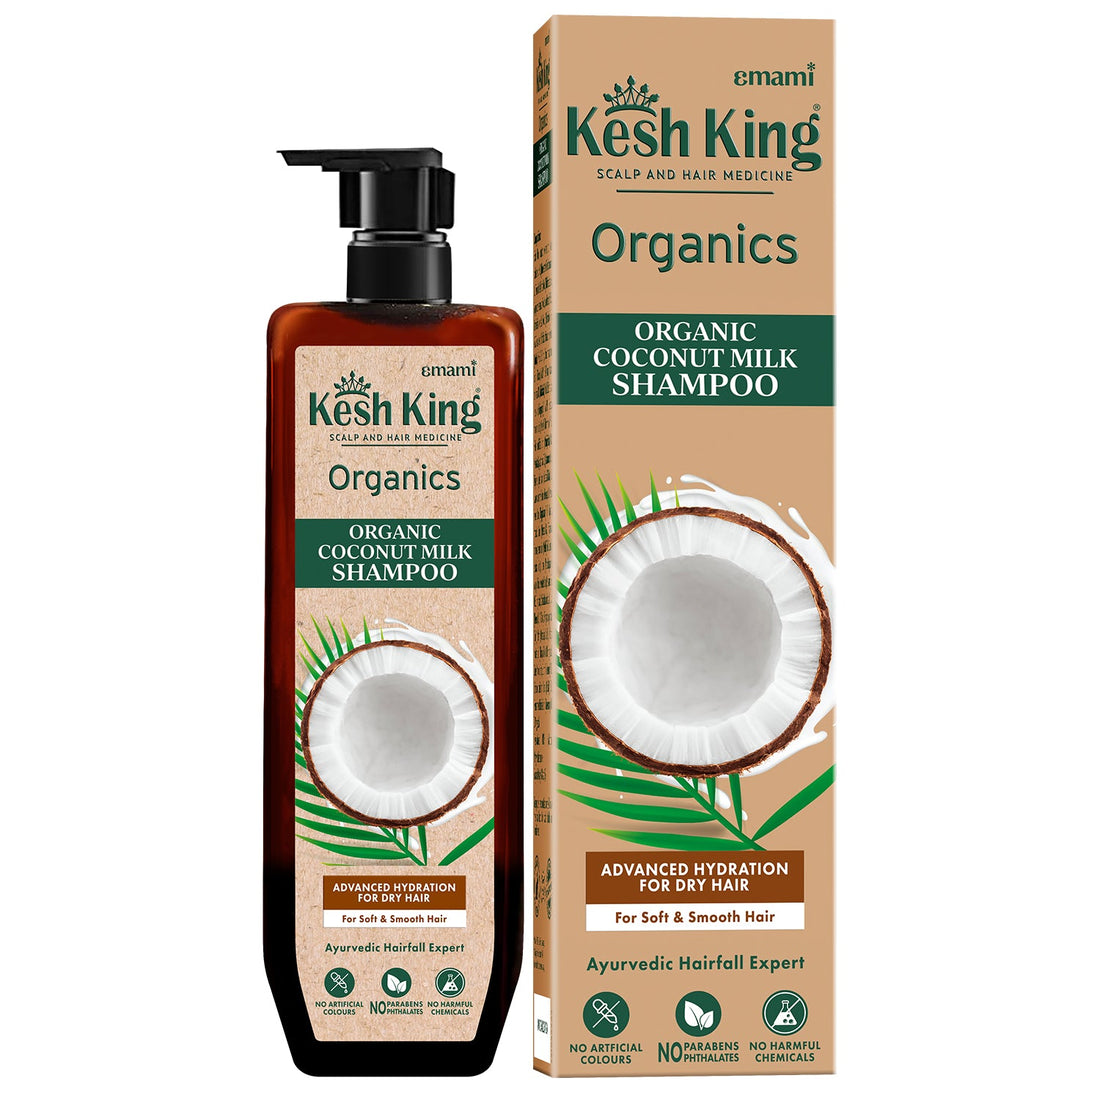 Kesh King Organics - Organic Coconut Milk Shampoo for Advanced Hydration